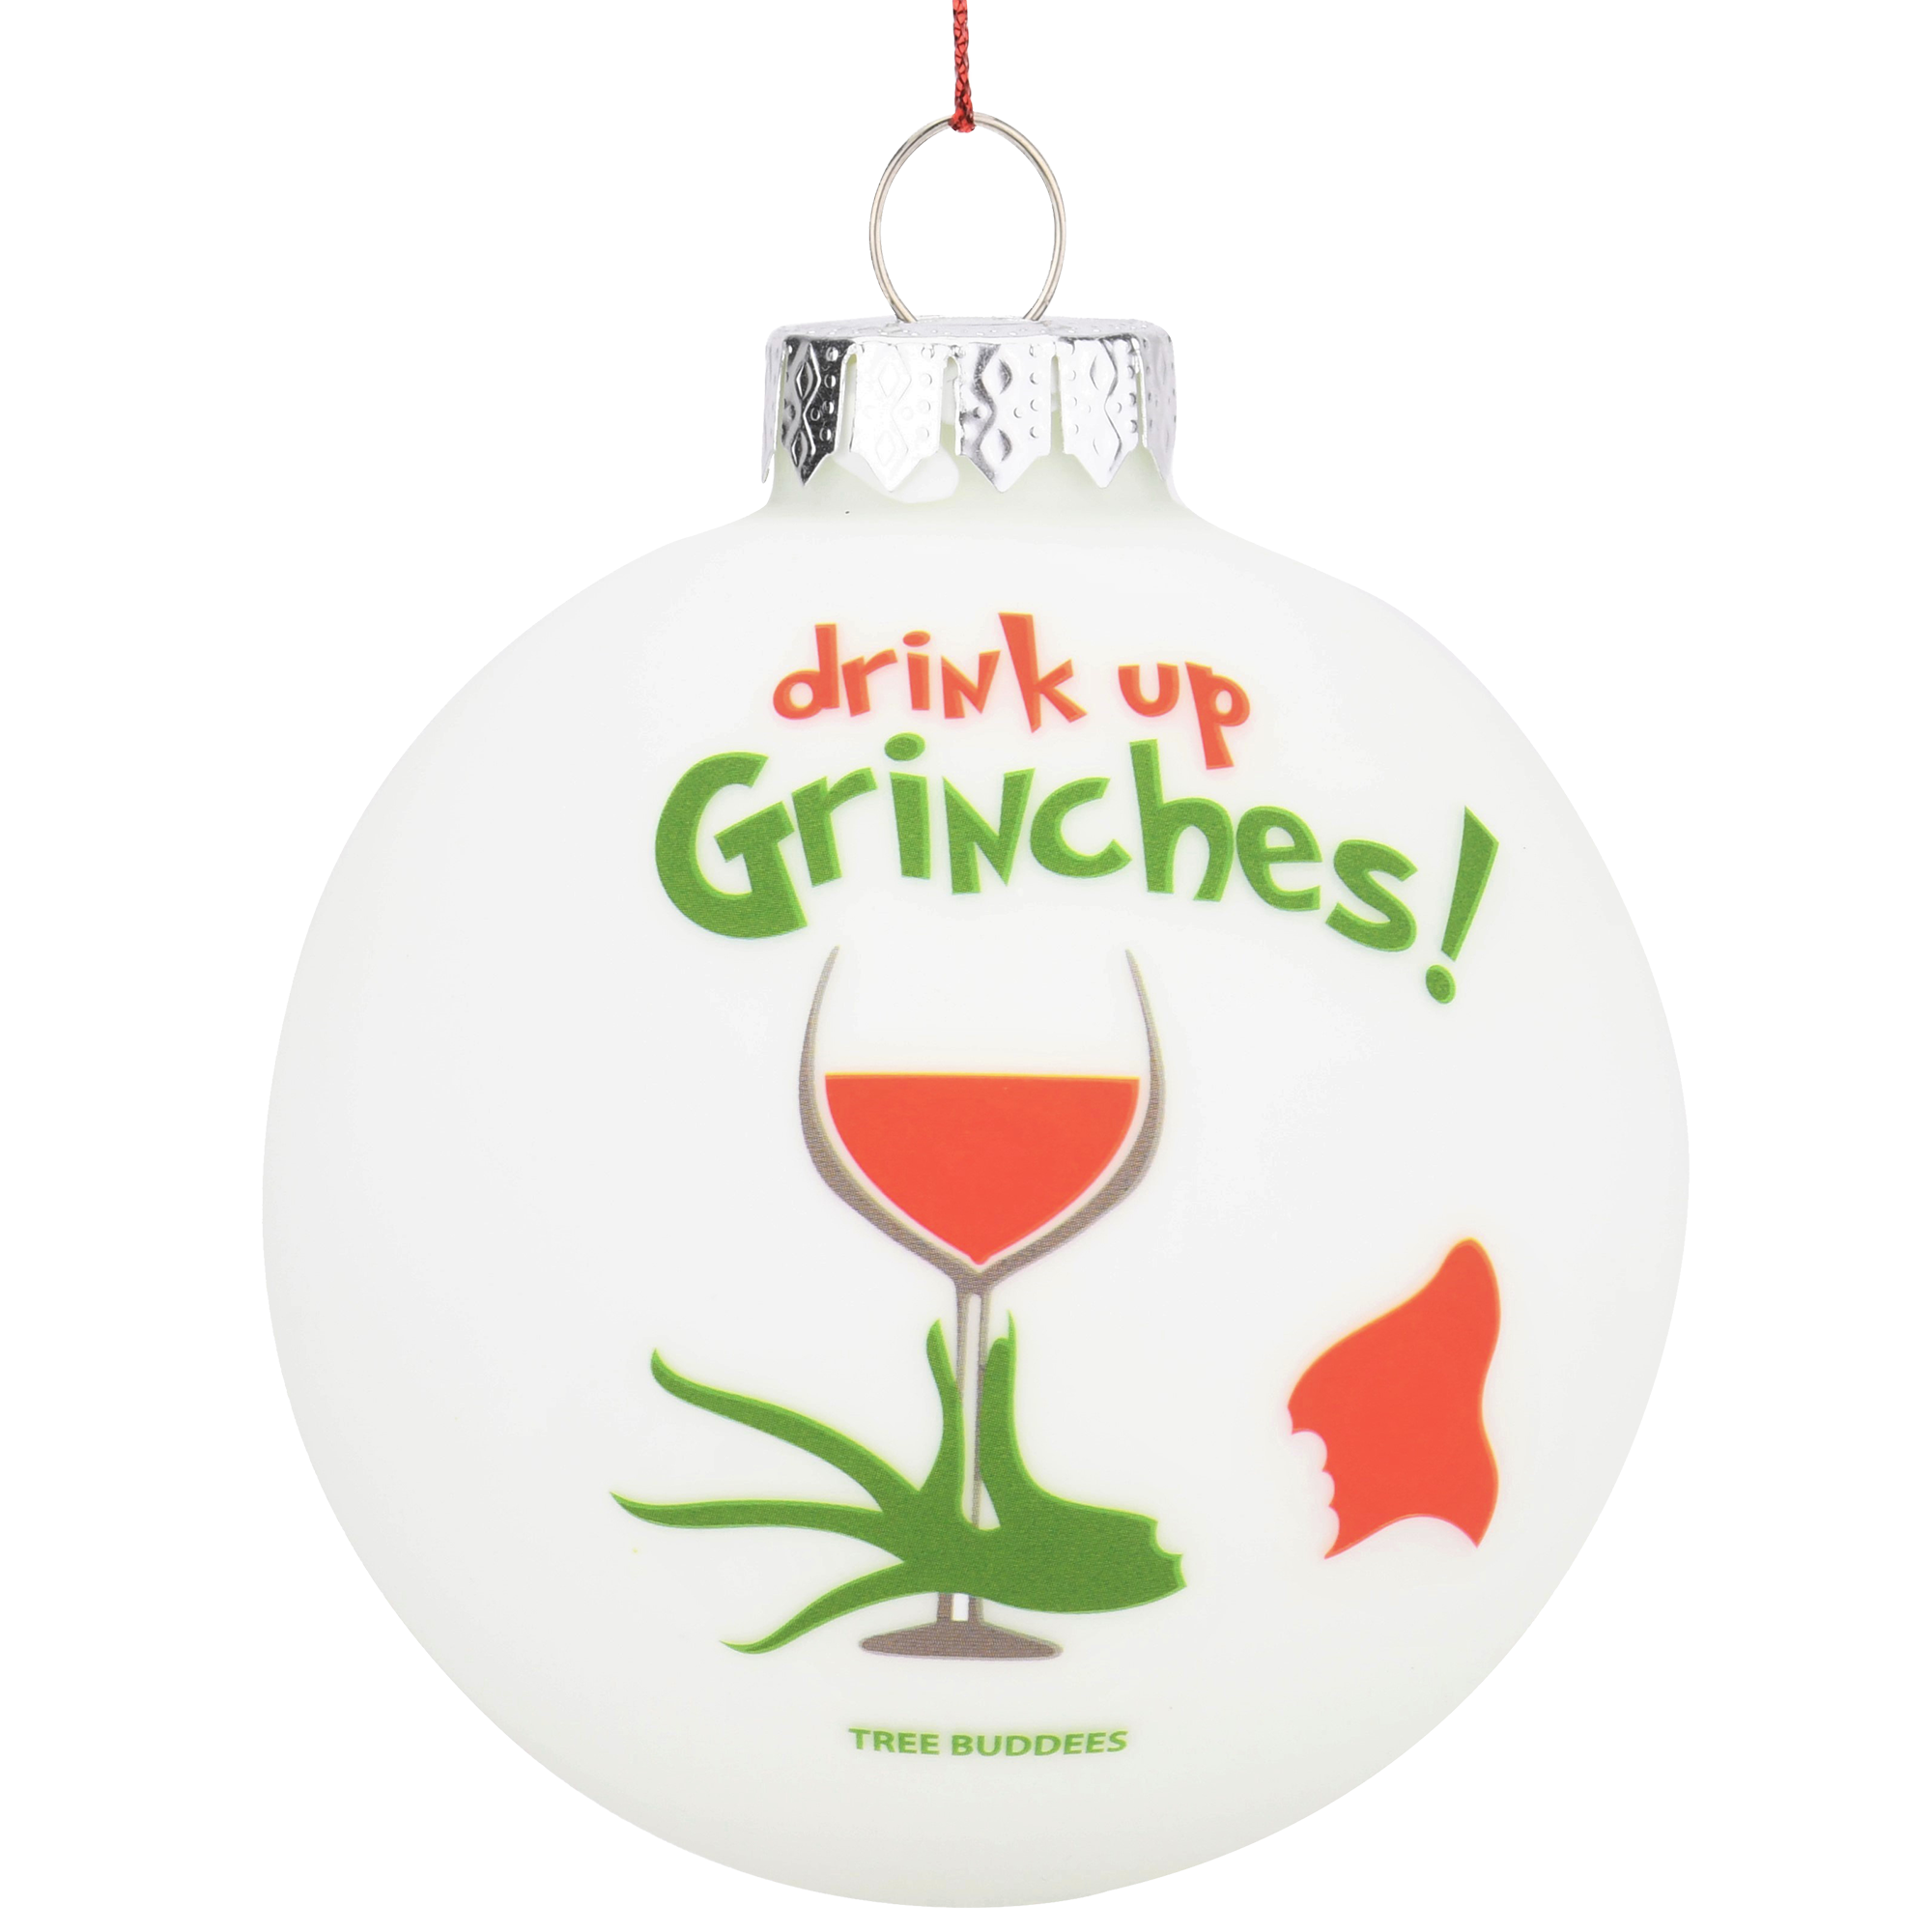 wine Christmas ornaments